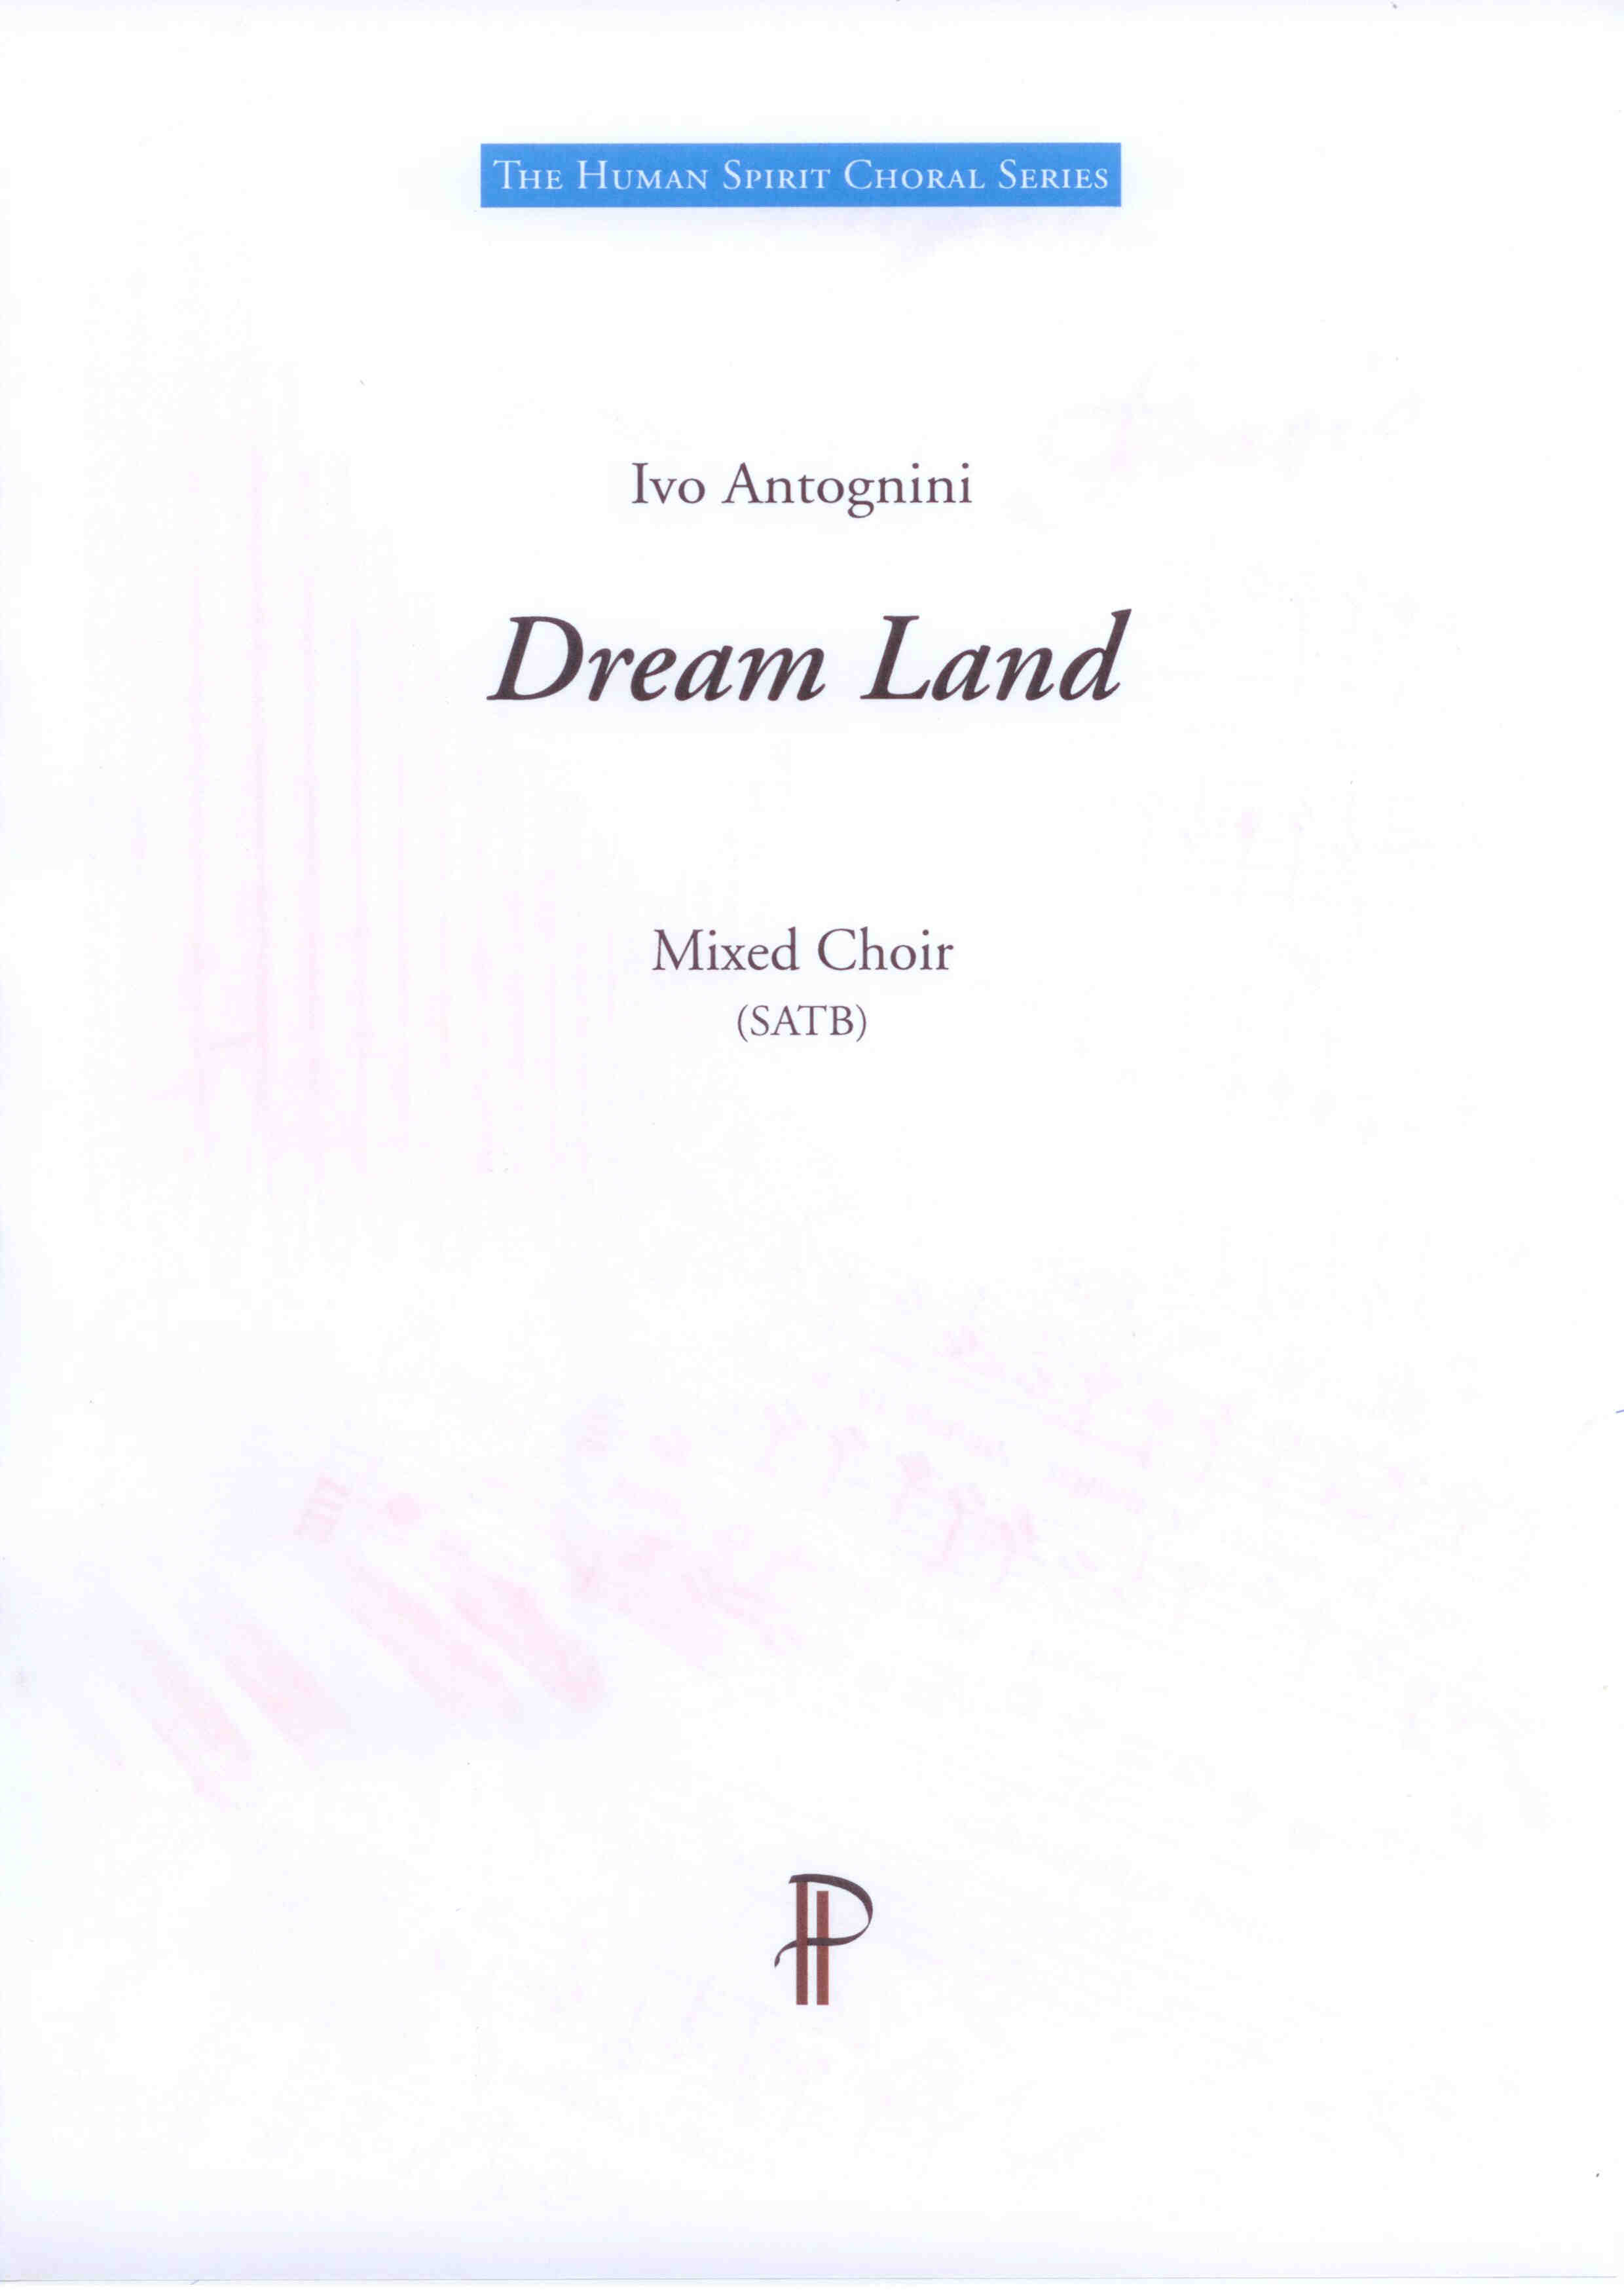 Dream Land - Show sample score